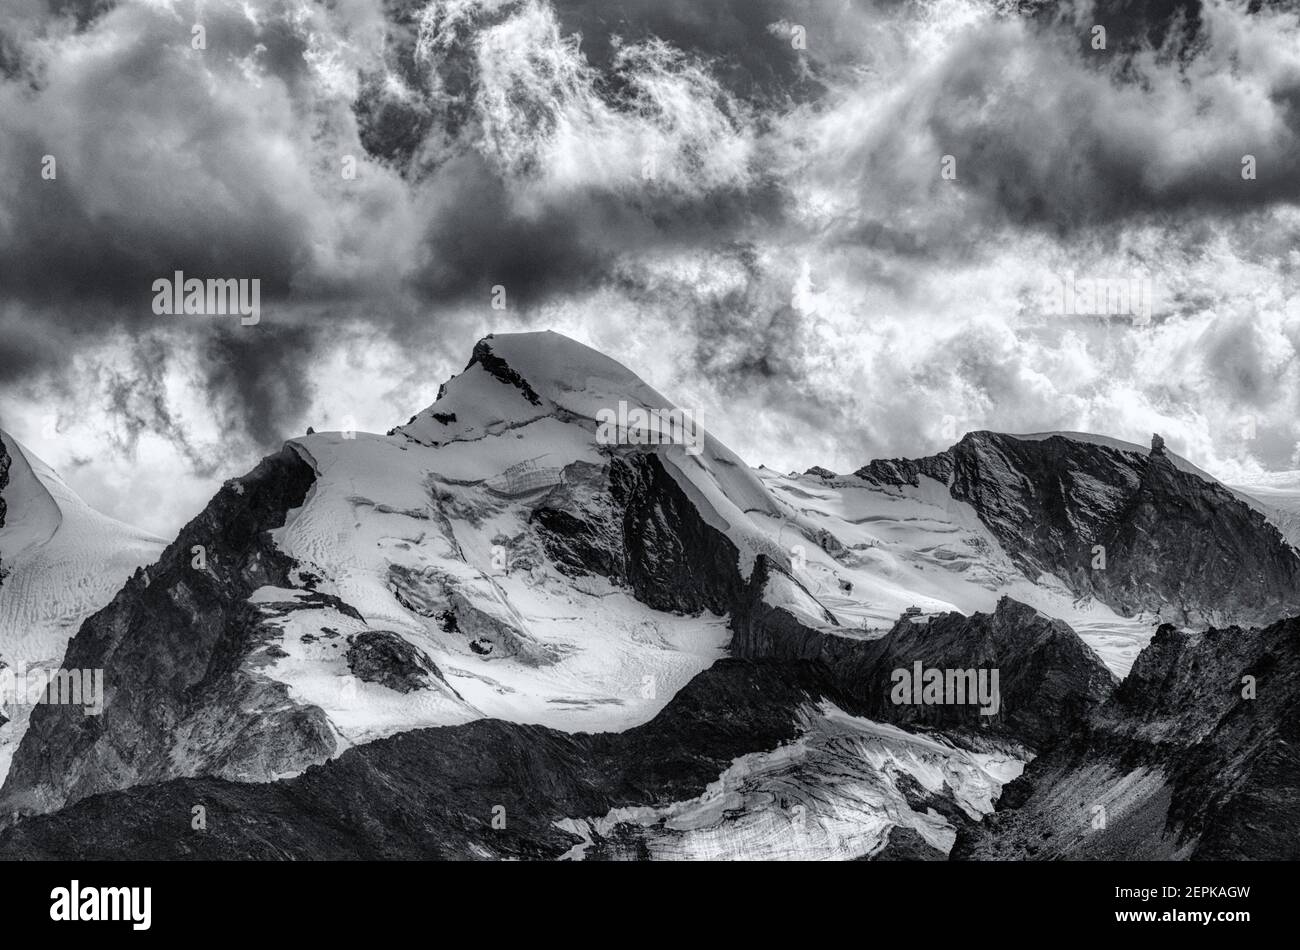 The Allalinhorn in the Swiss Alps, Switzerland Stock Photo